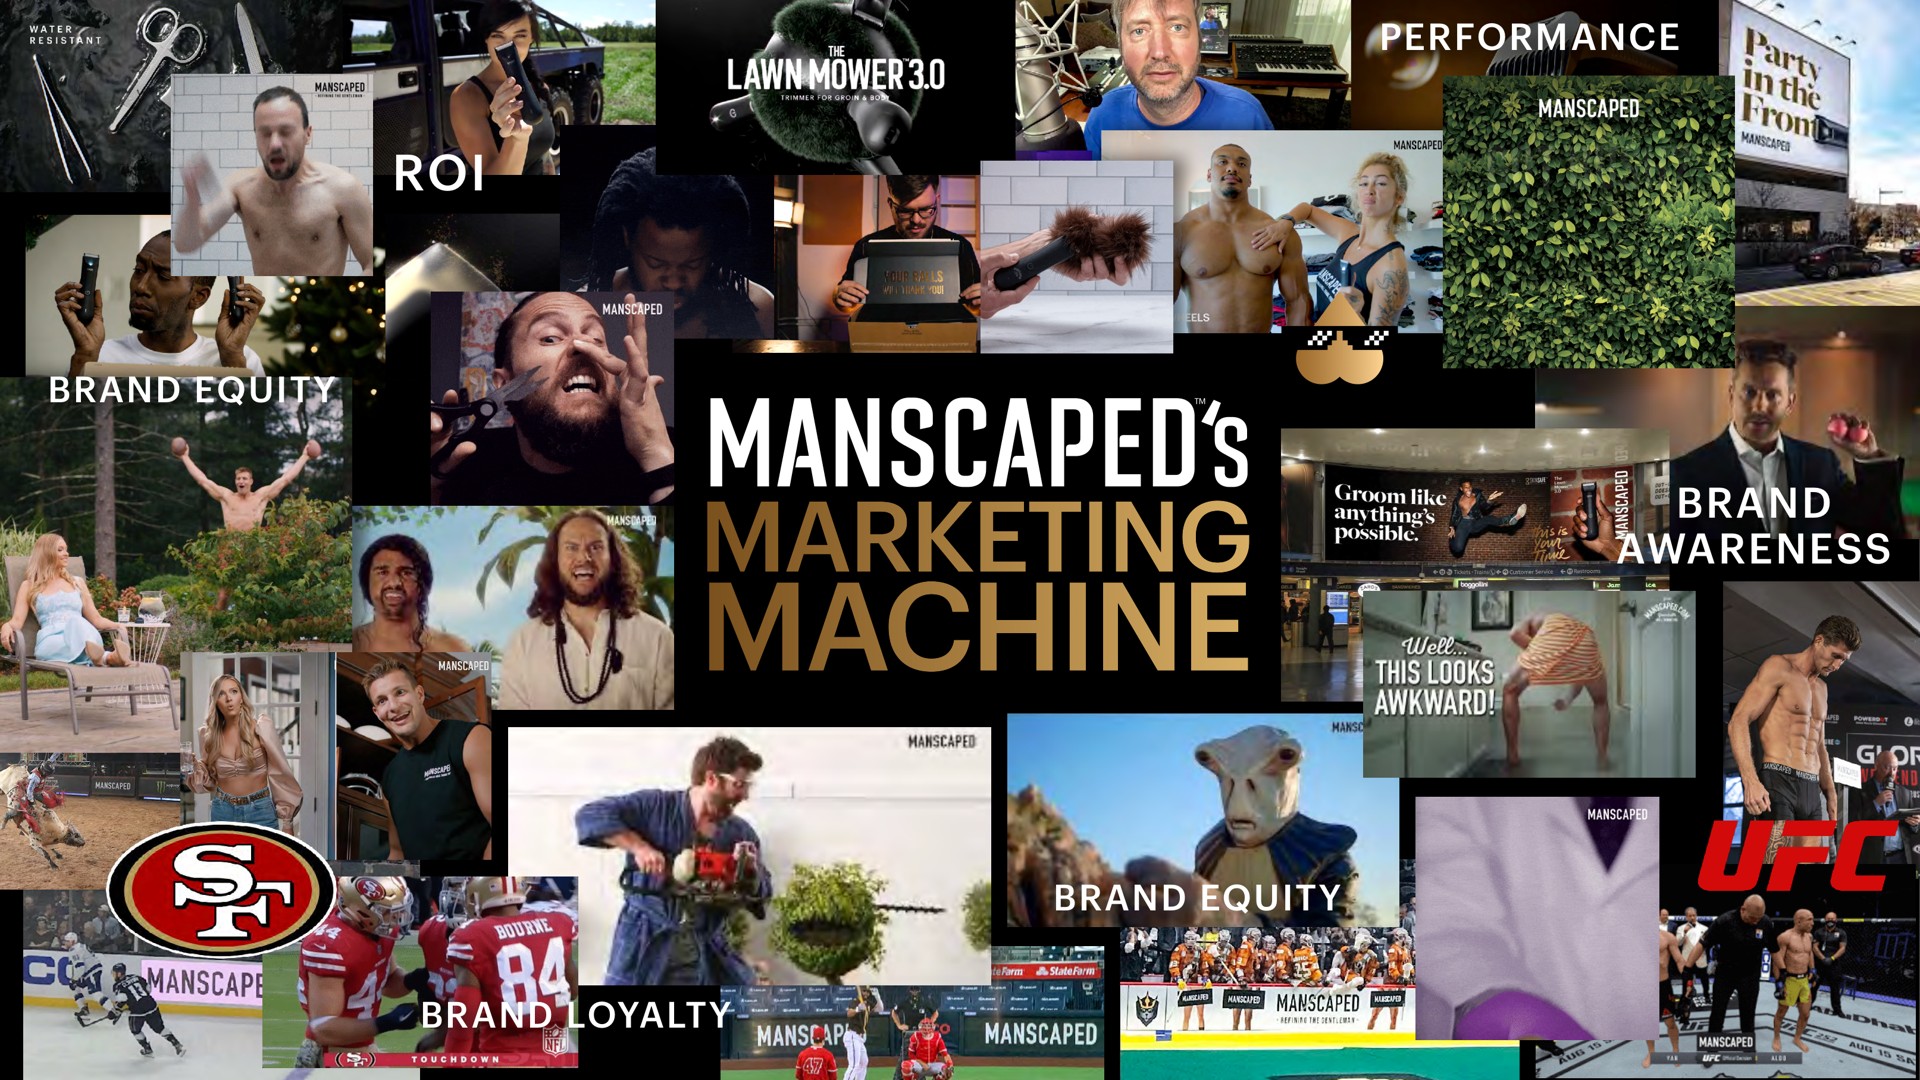 roi brand equity performance marketing machine brand awareness brand equity brand loyalty | Manscaped